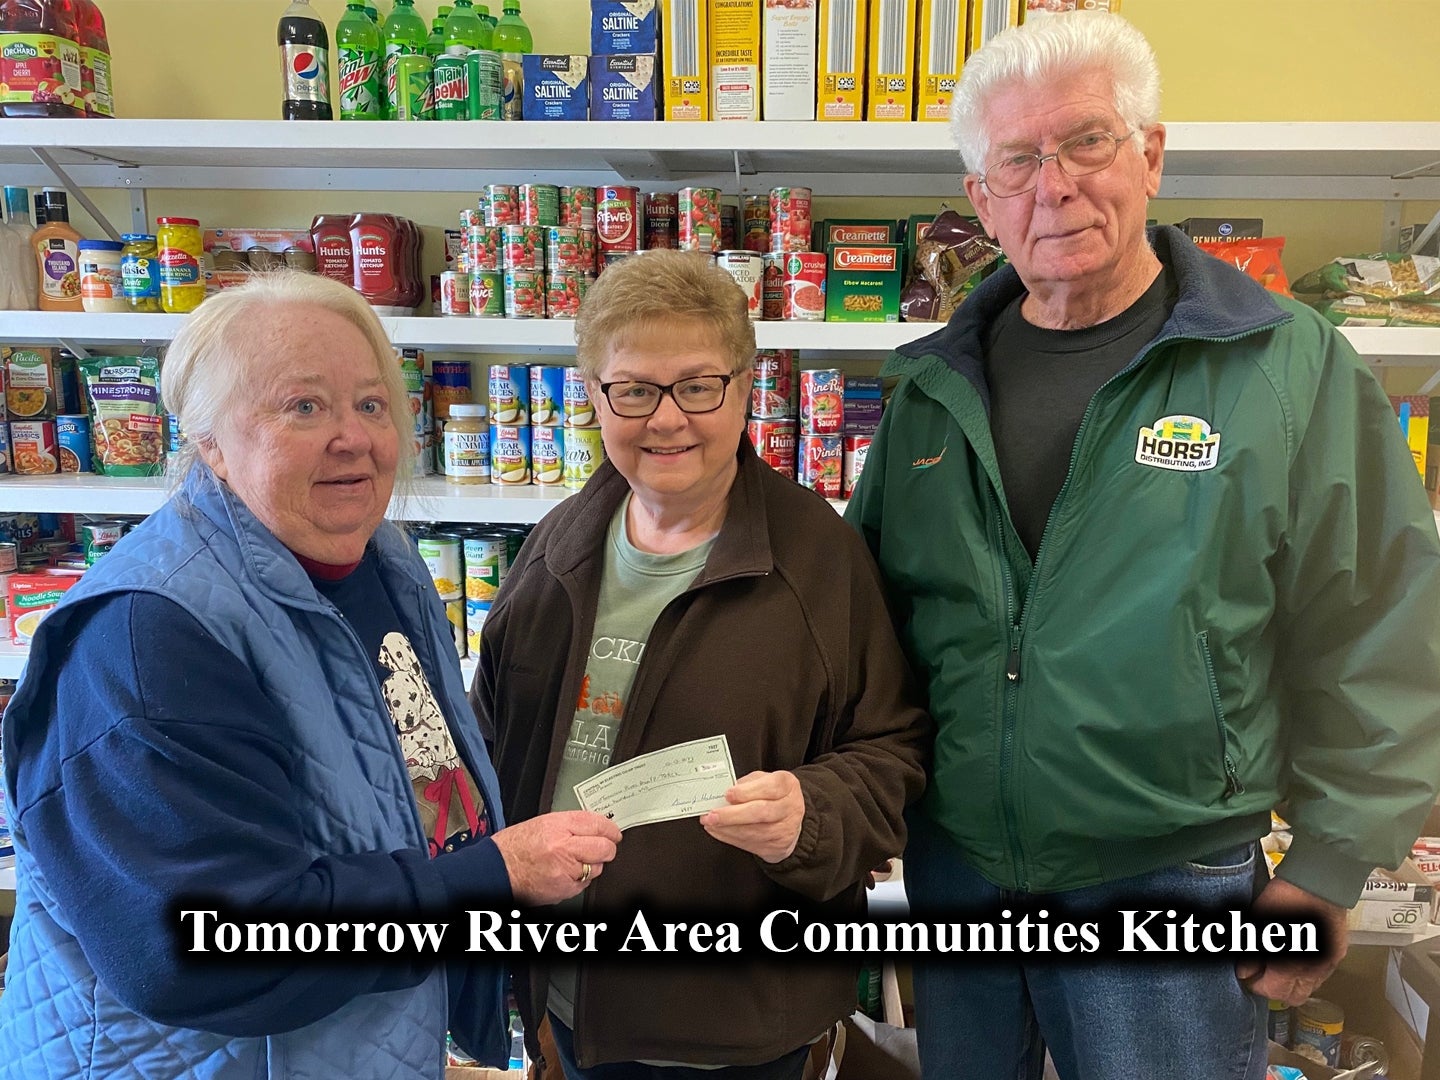 Tomorrow River Communities Kitchen